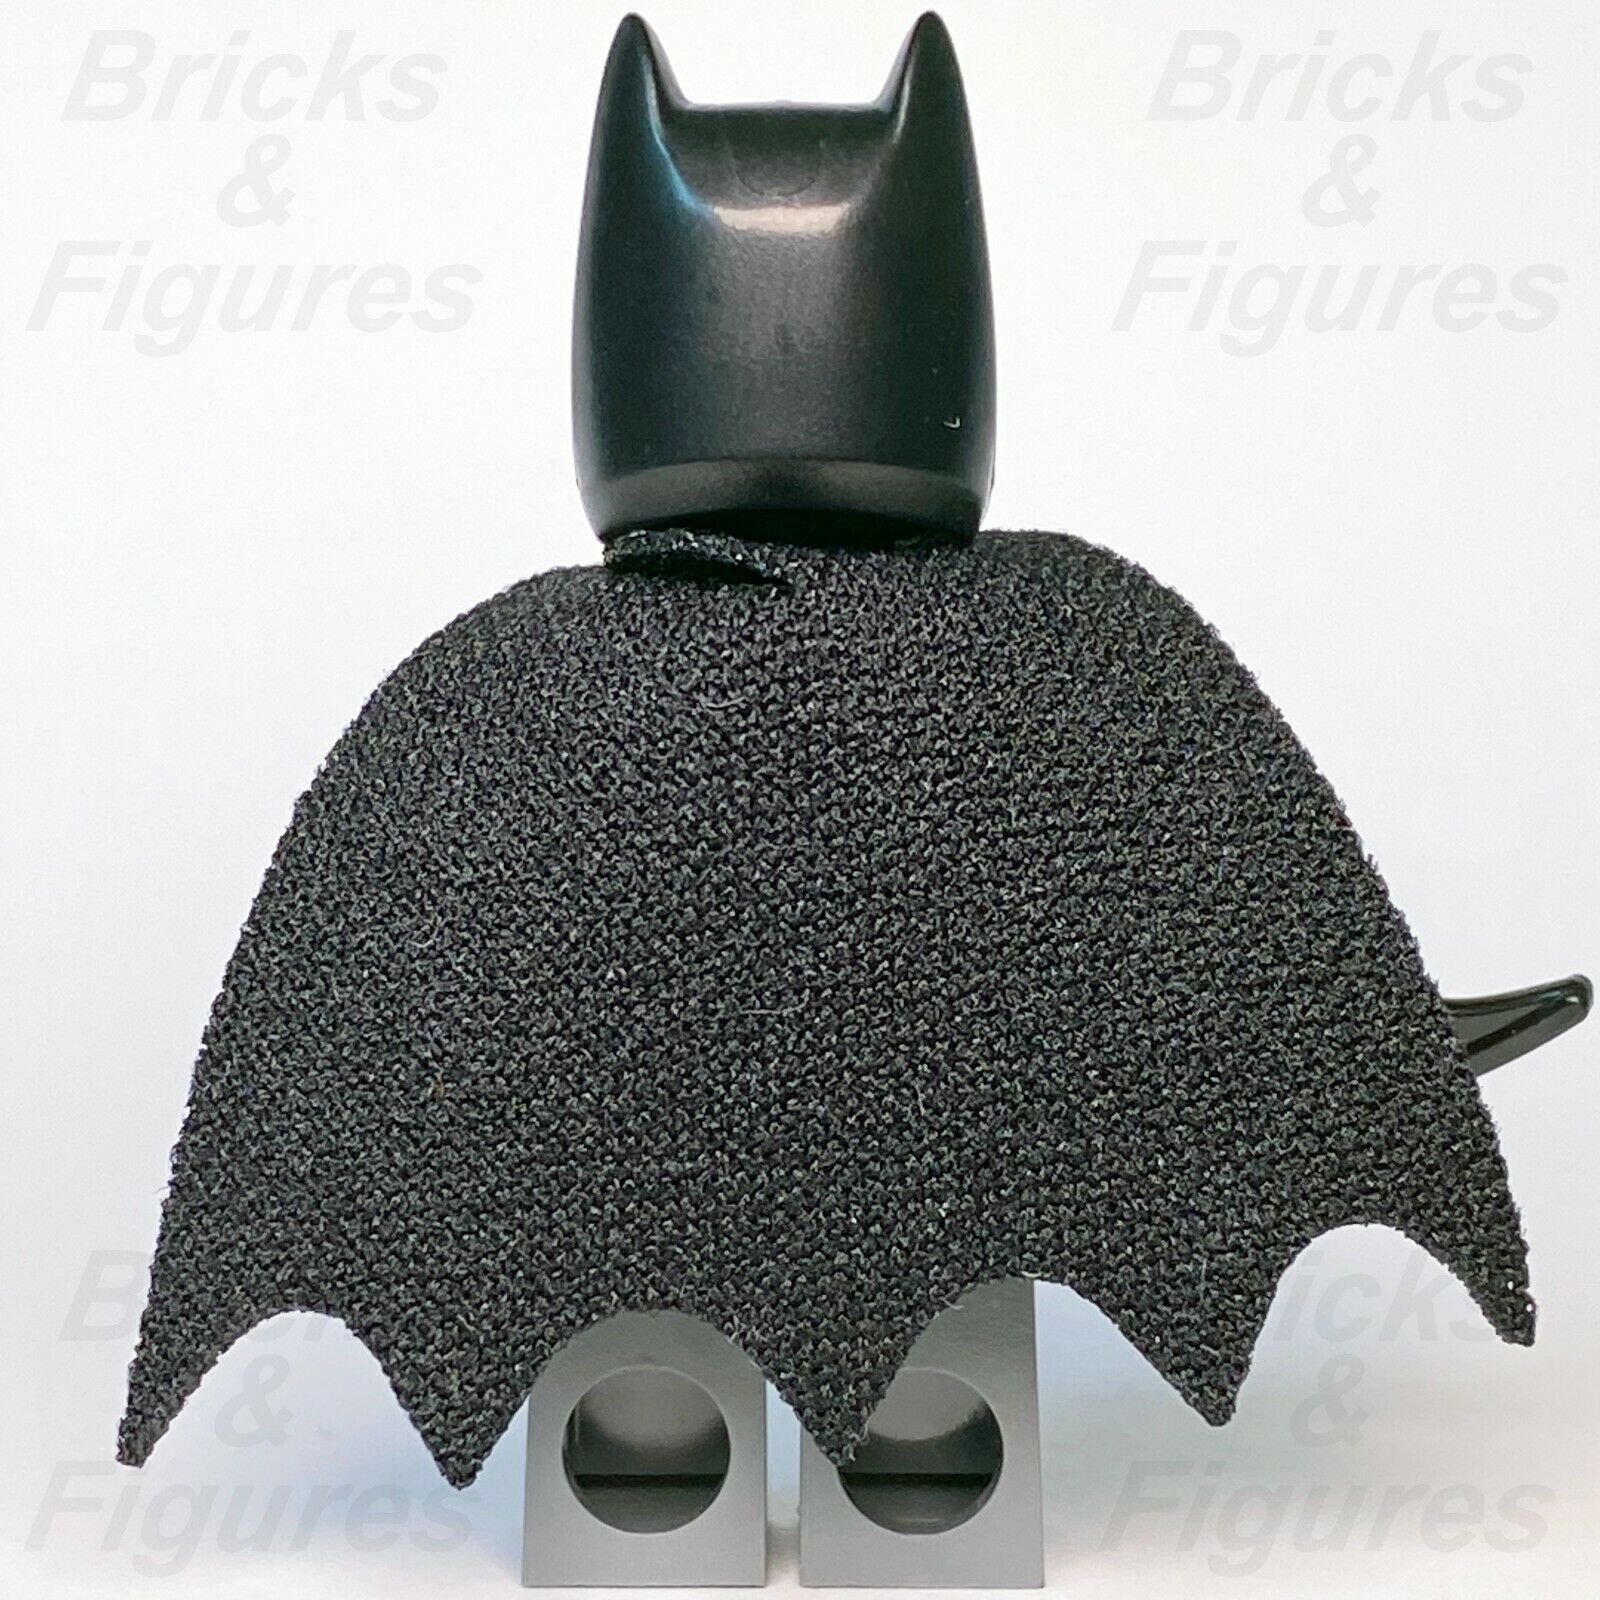 DC Super Heroes LEGO® Batman 2 Bruce Wayne Minifigure 76122 76120 76119 76118 - Bricks & Figures